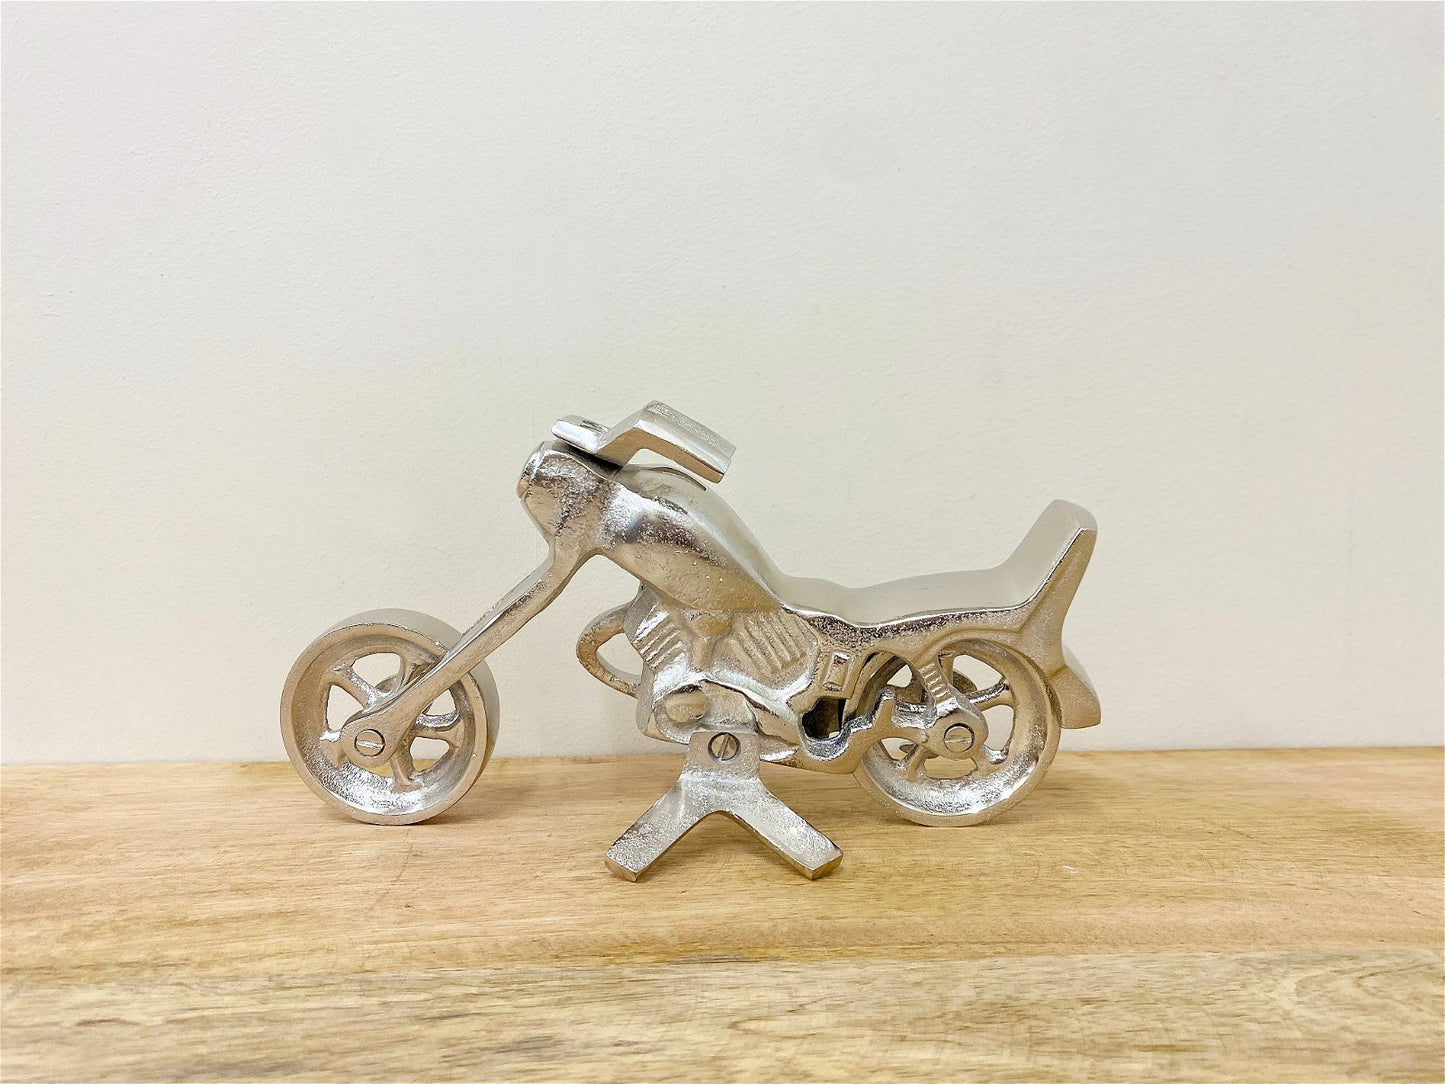 Silver Aluminium Motorcycle Ornament